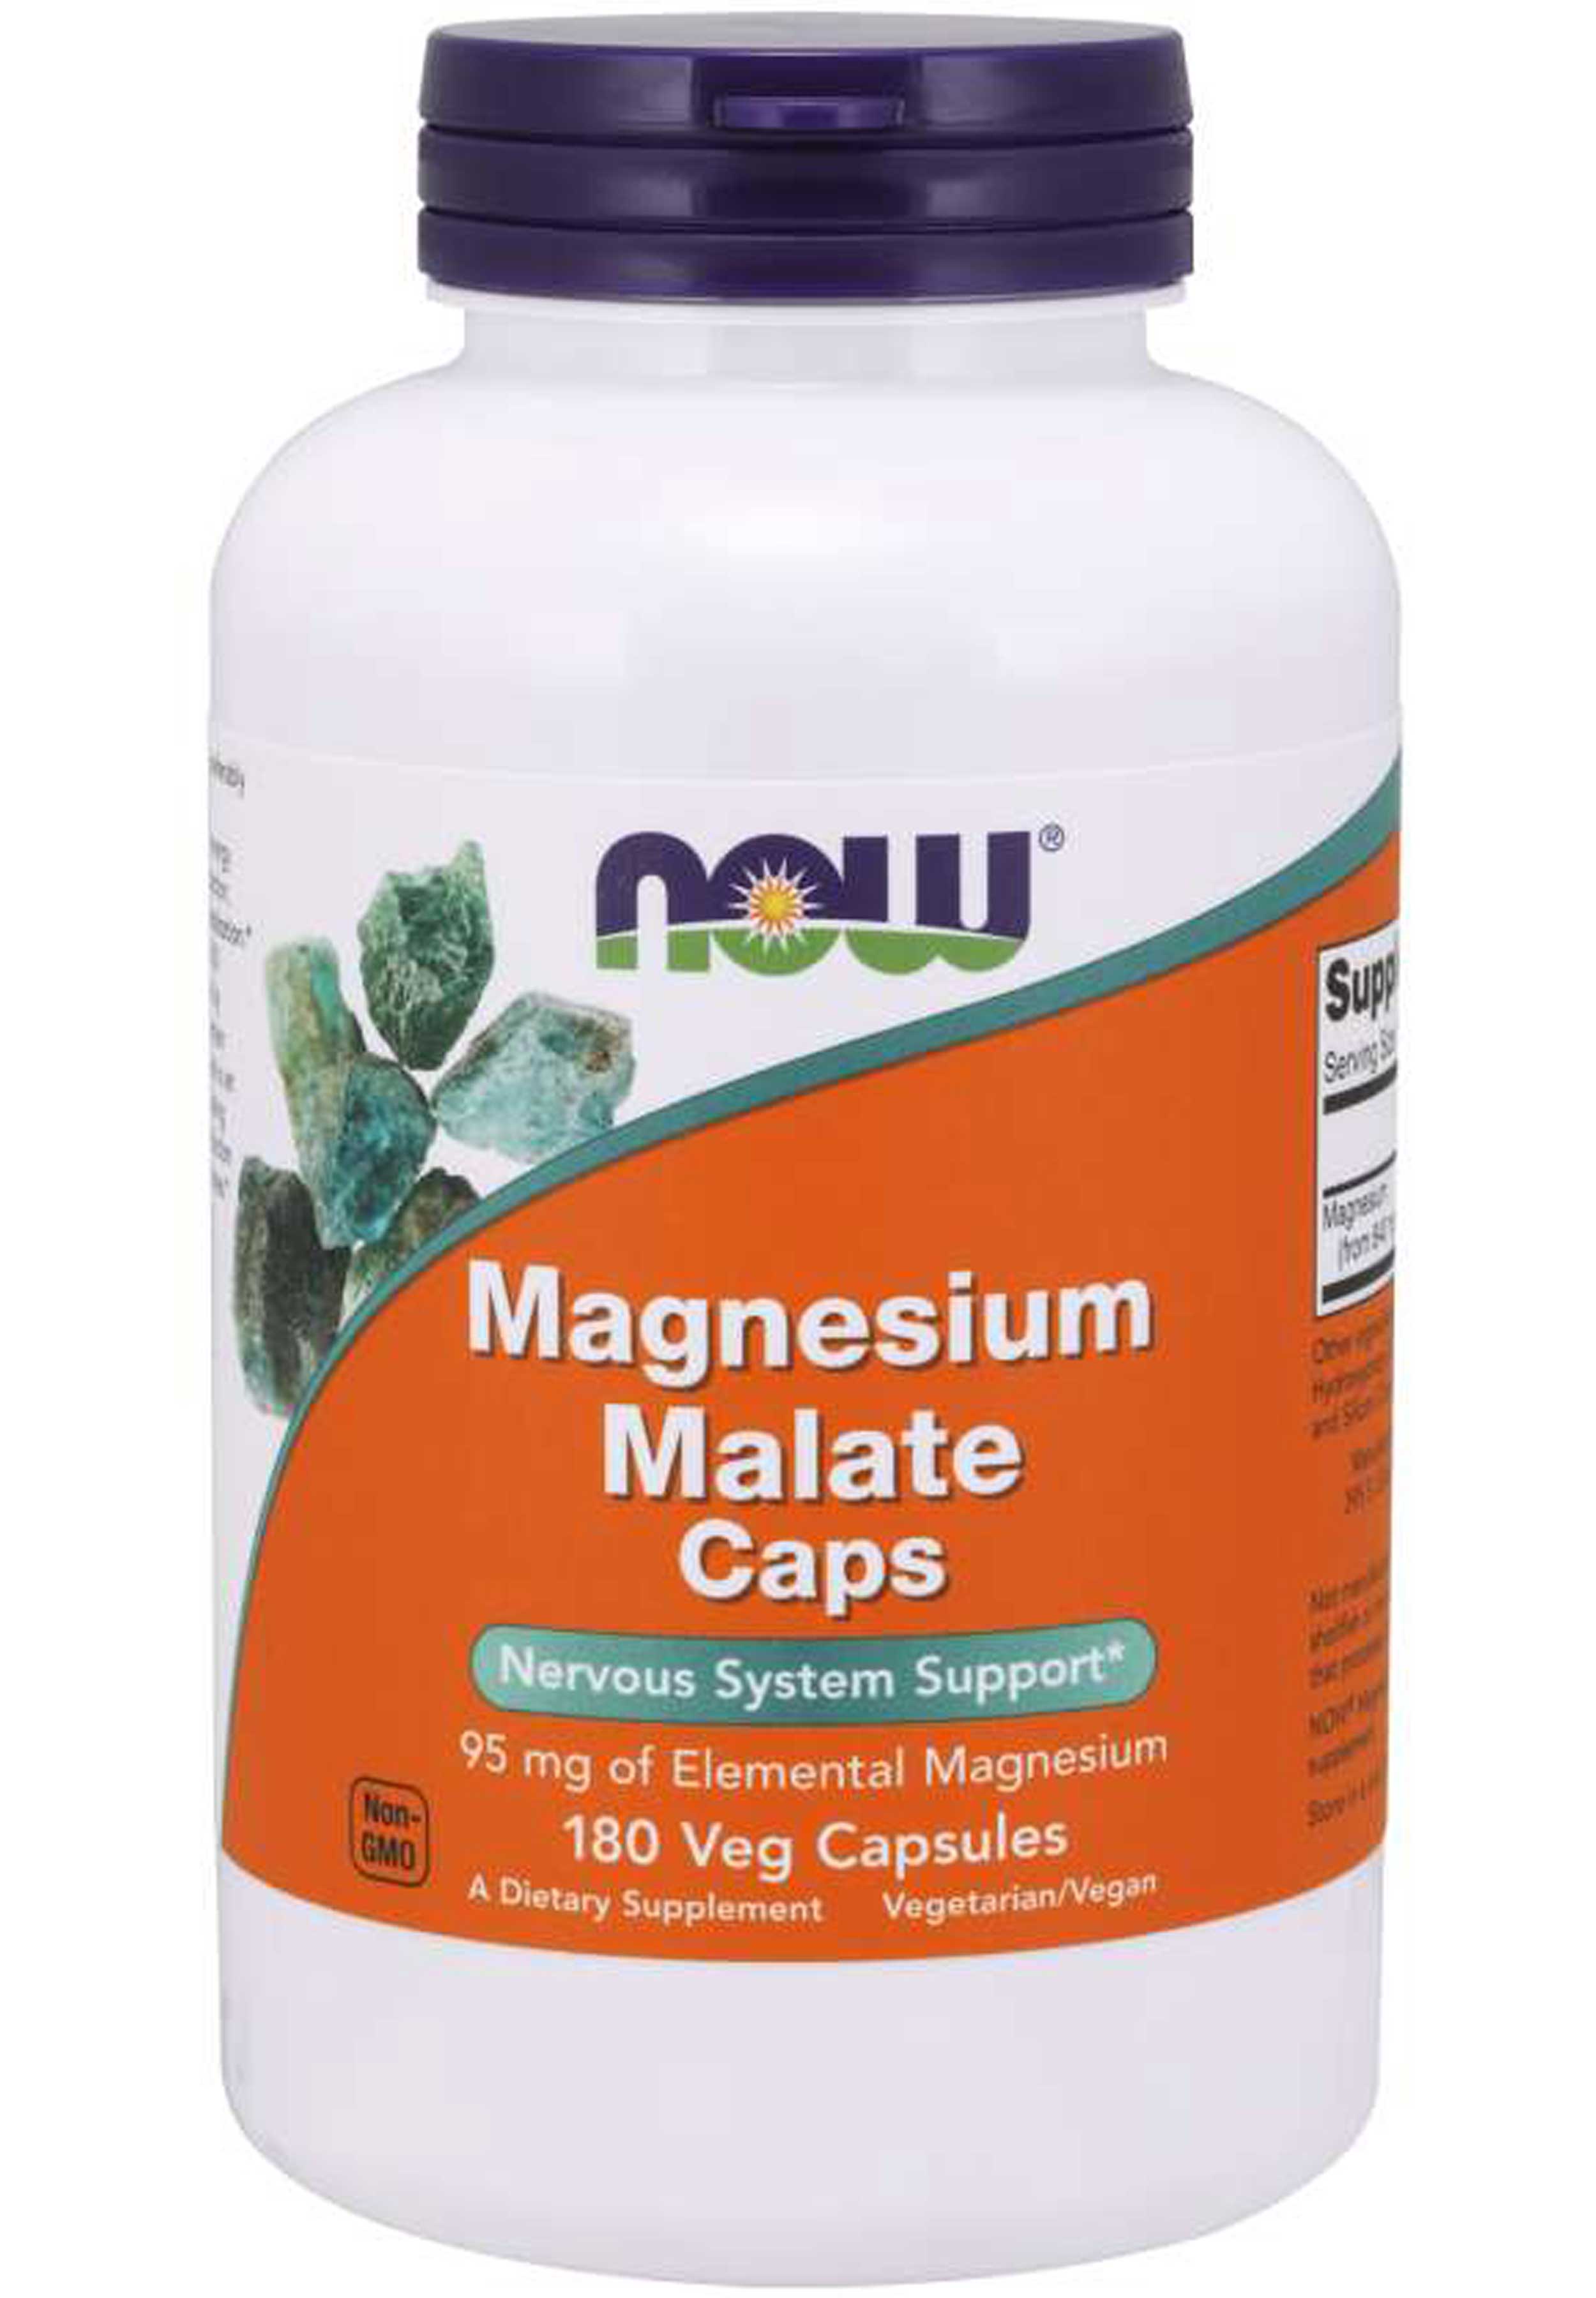 NOW Magnesium Malate Caps